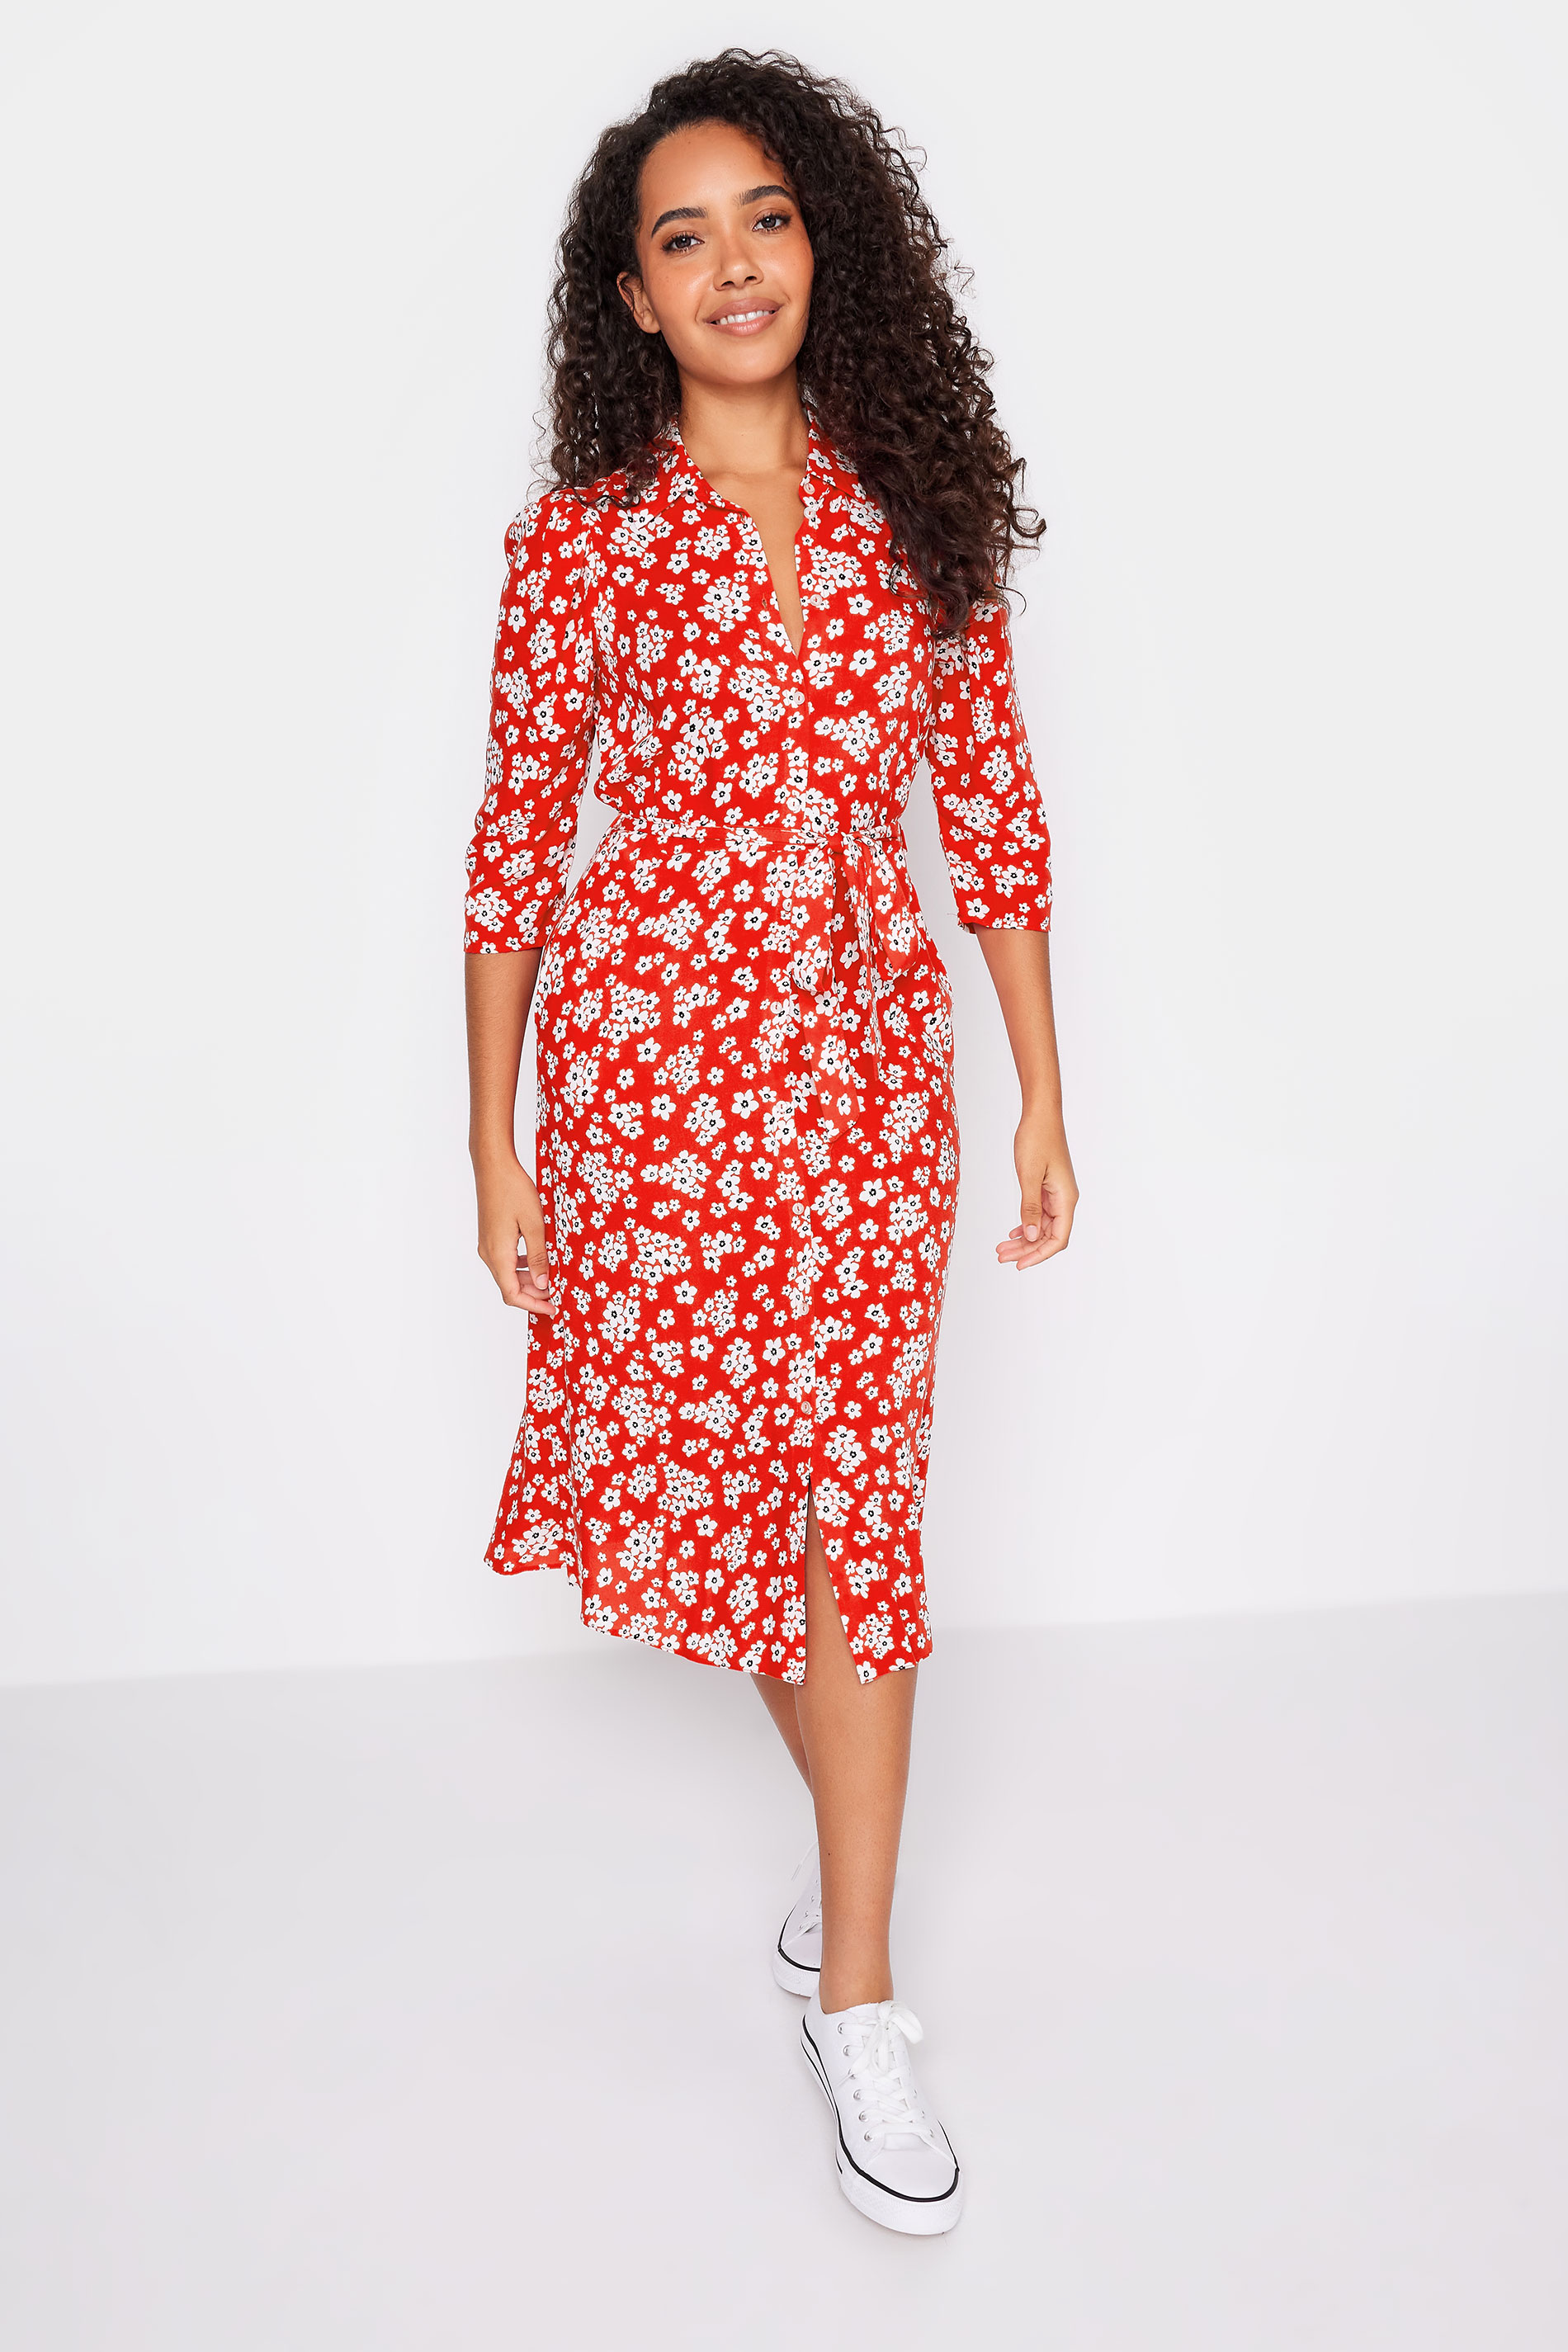 M&Co Red Floral Print Button Through Midi Dress | M&Co 1